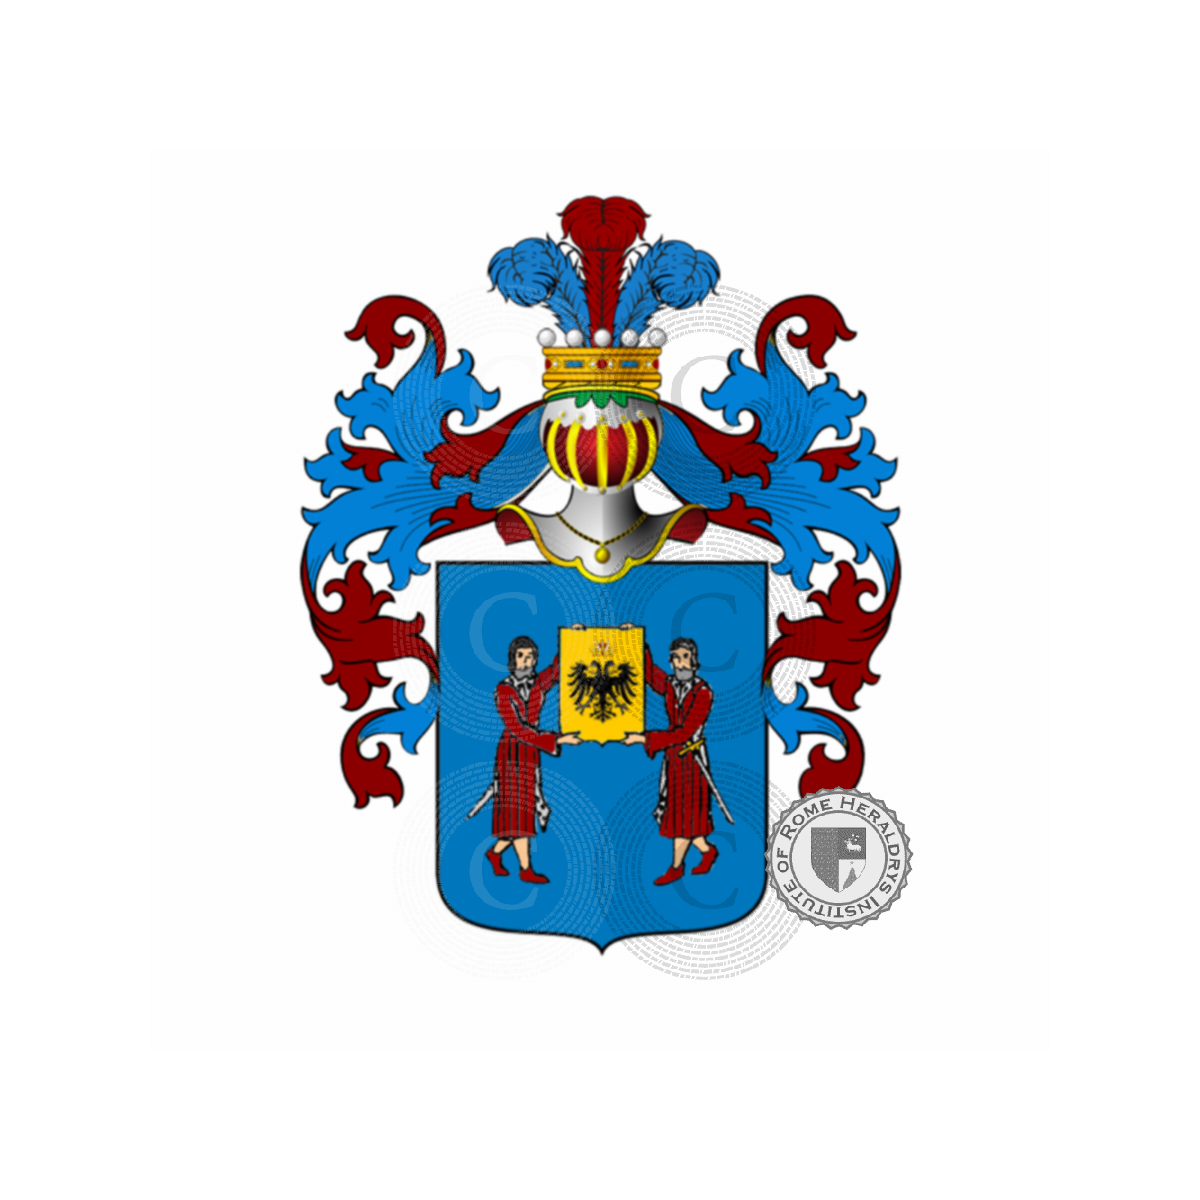 Coat of arms of familyVecchi, Vecchi (de)